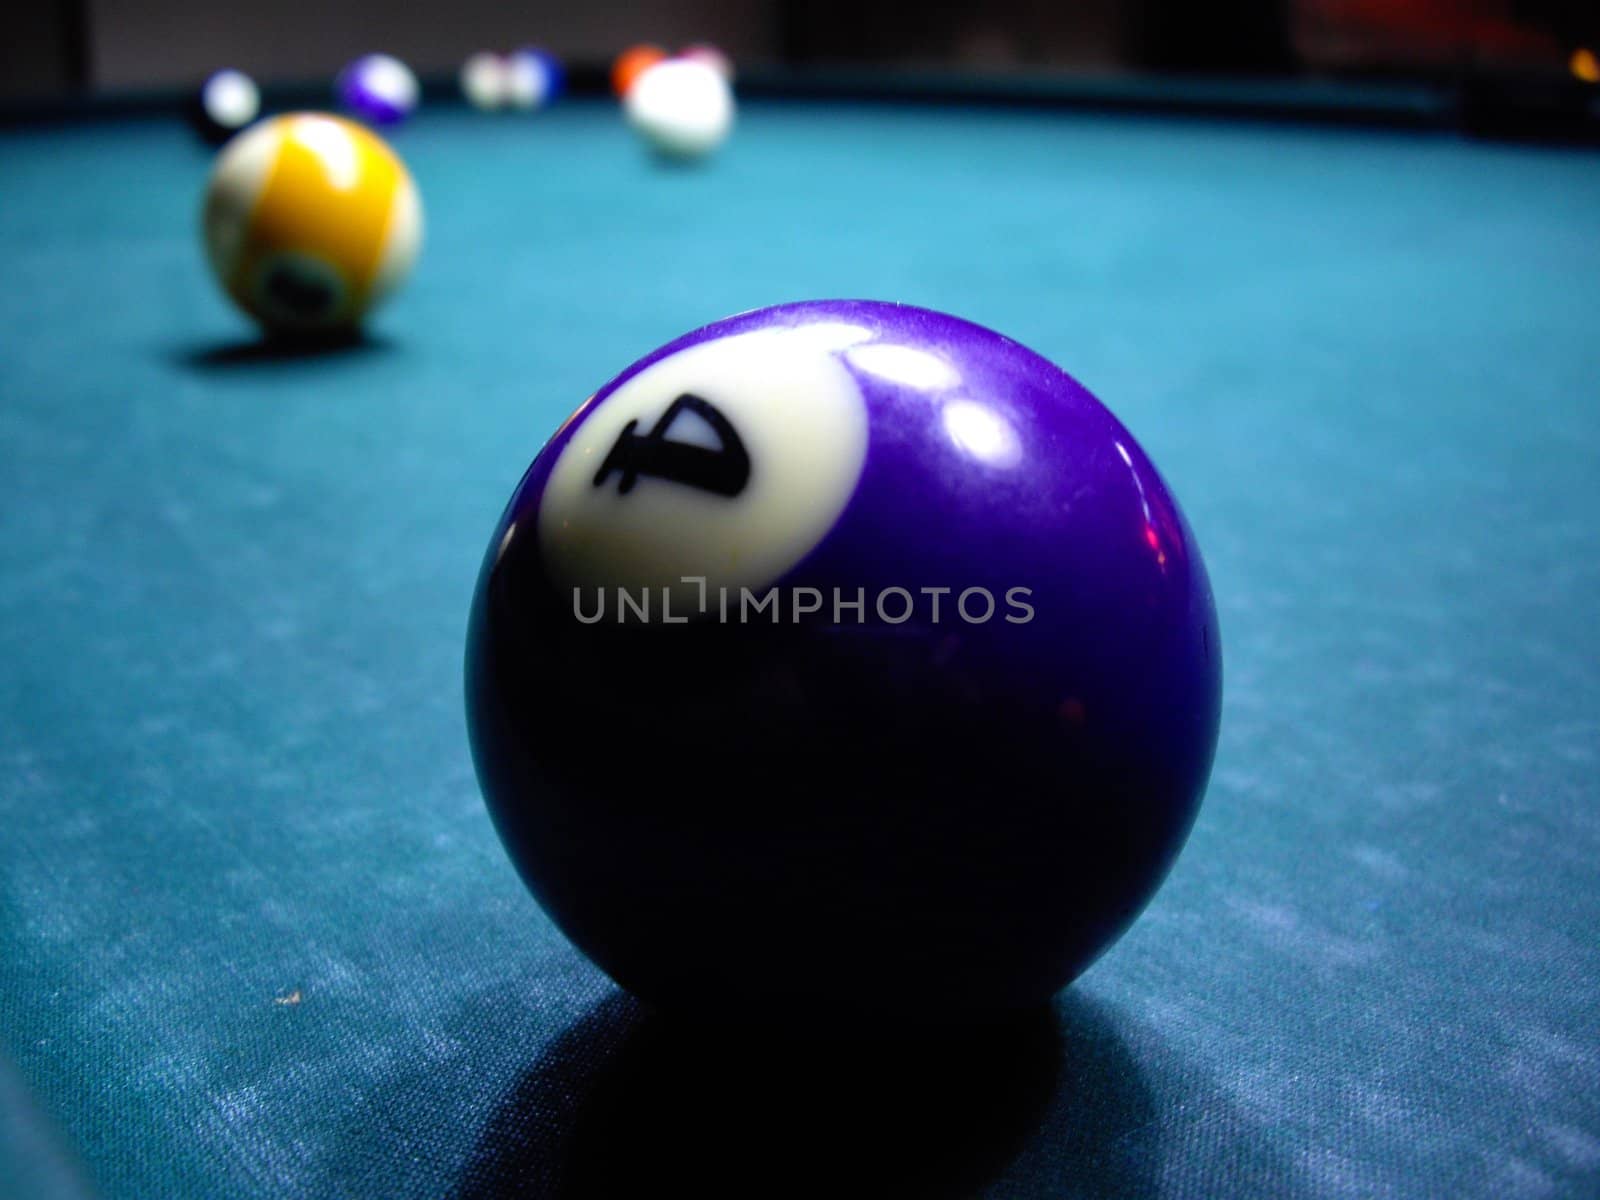 billiard balls on the green table